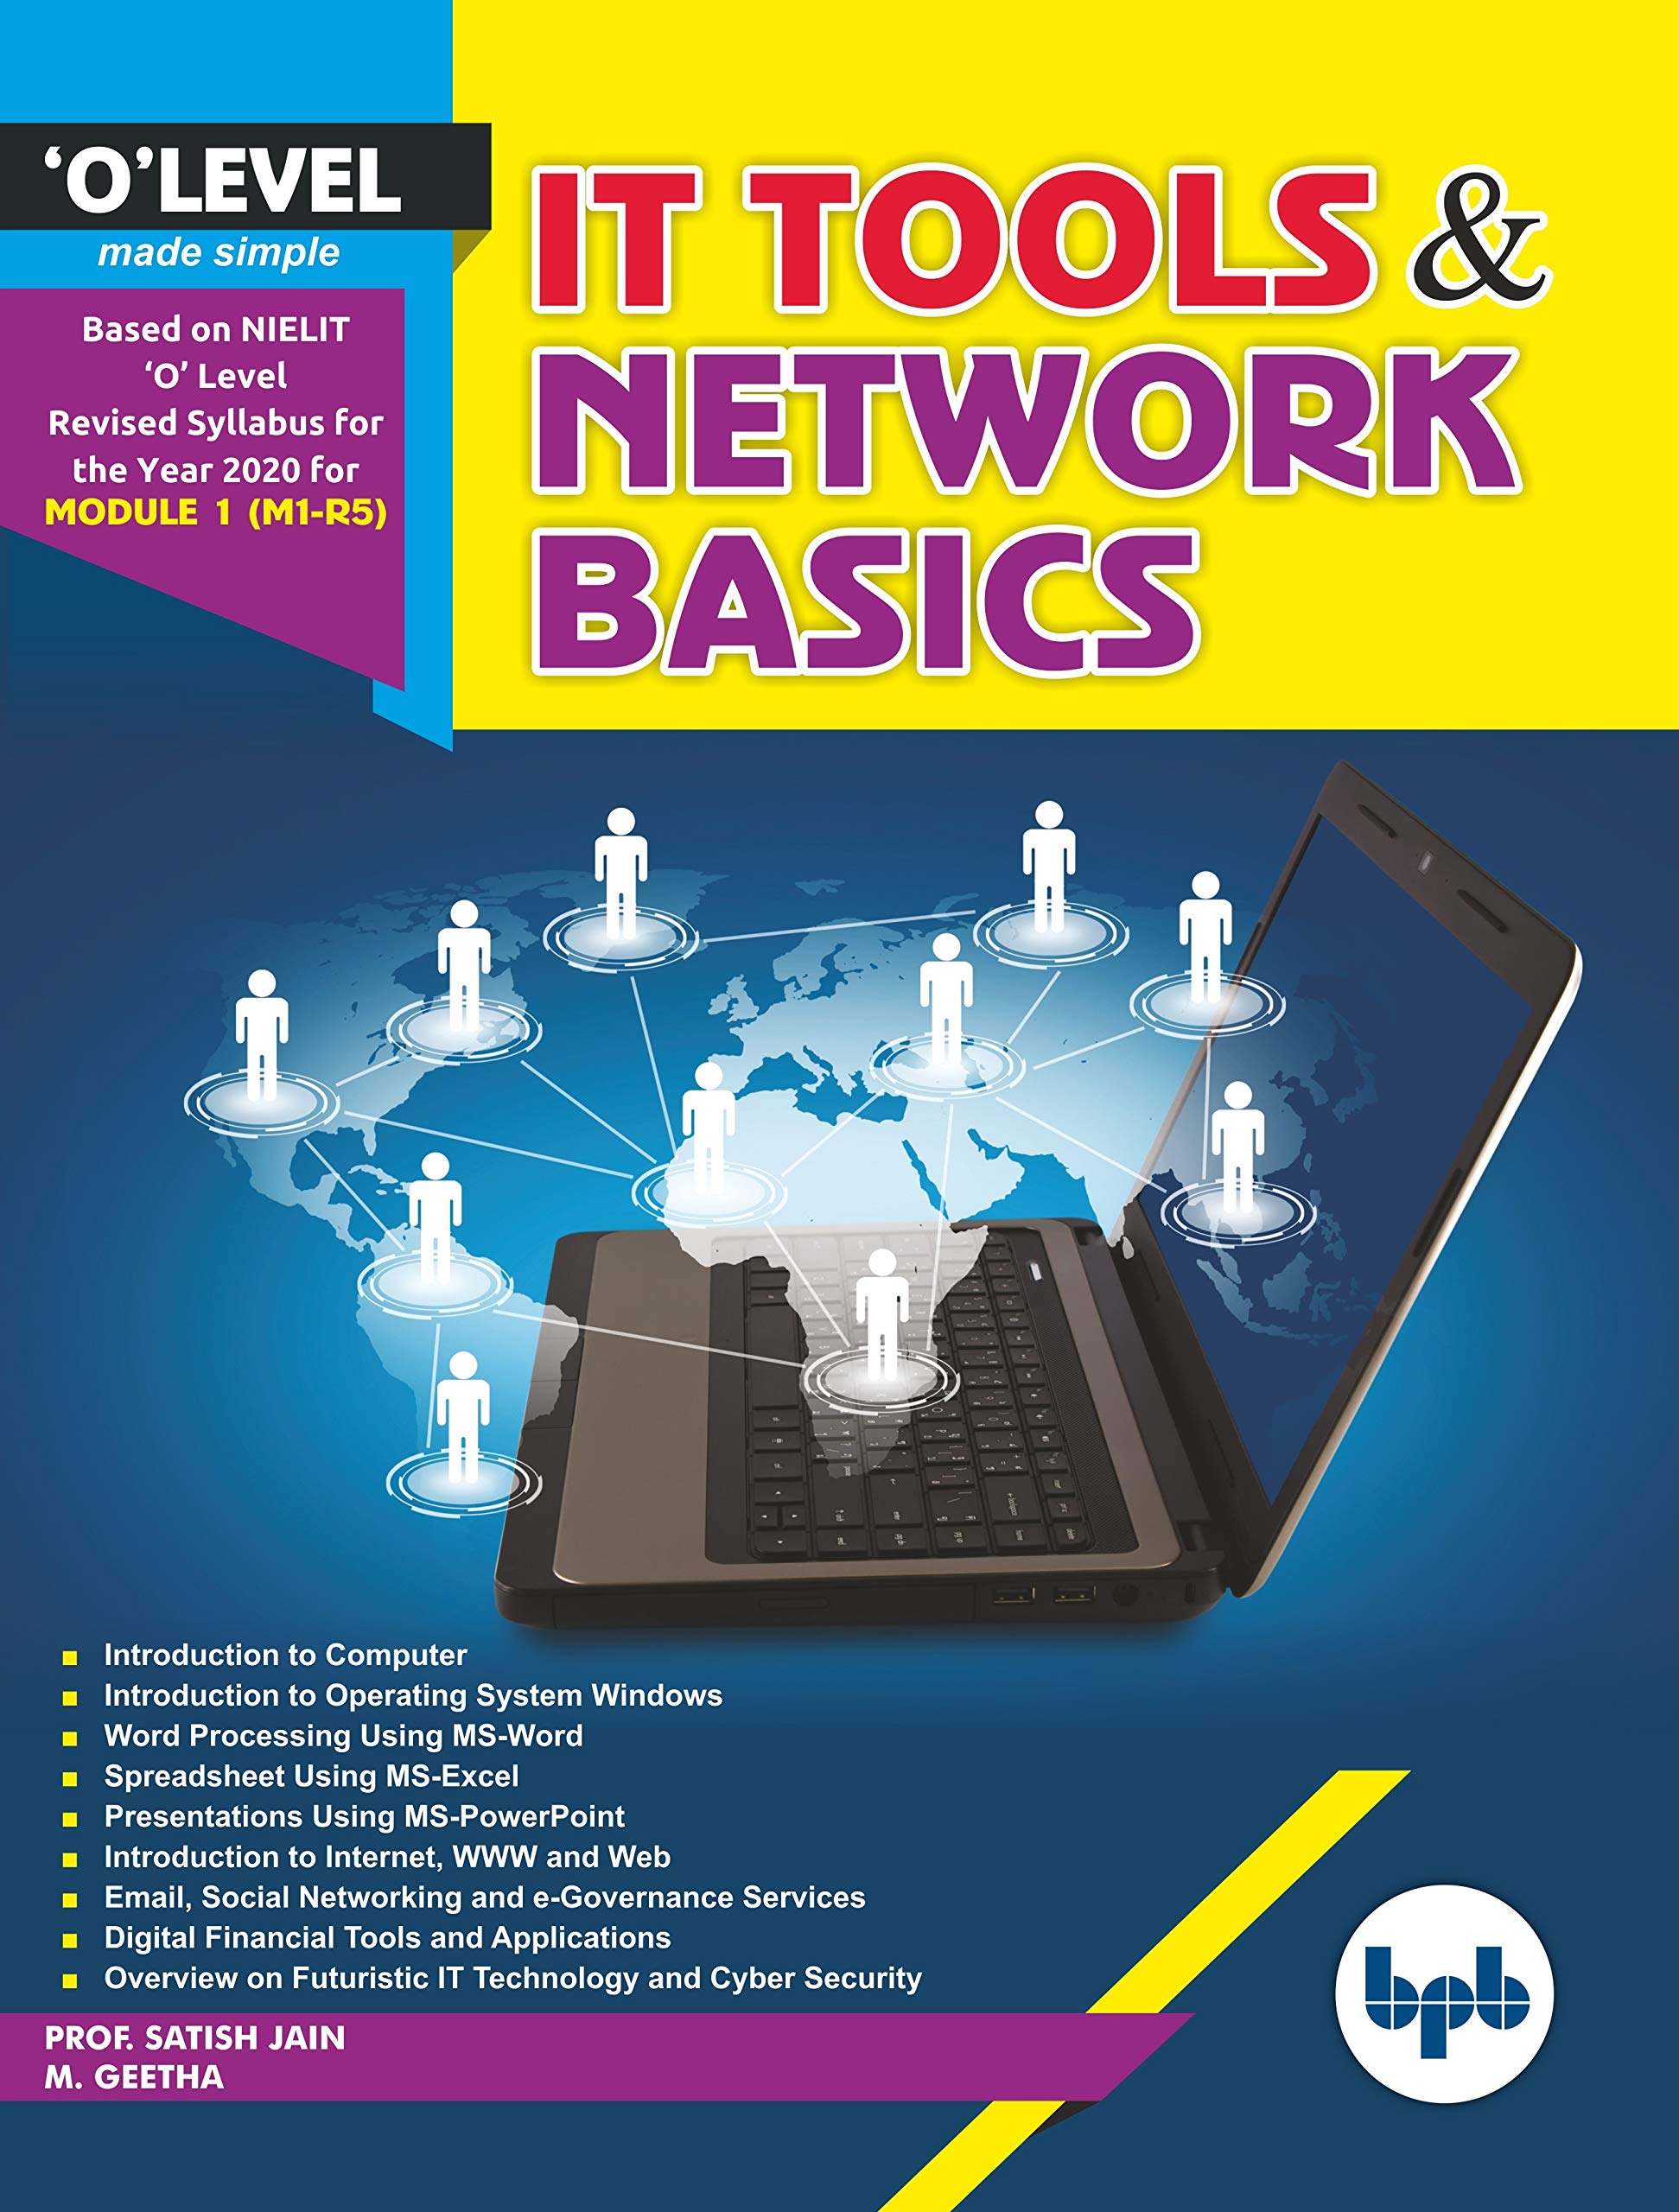 IT Tools & Network Basics: 'O' Level made simple